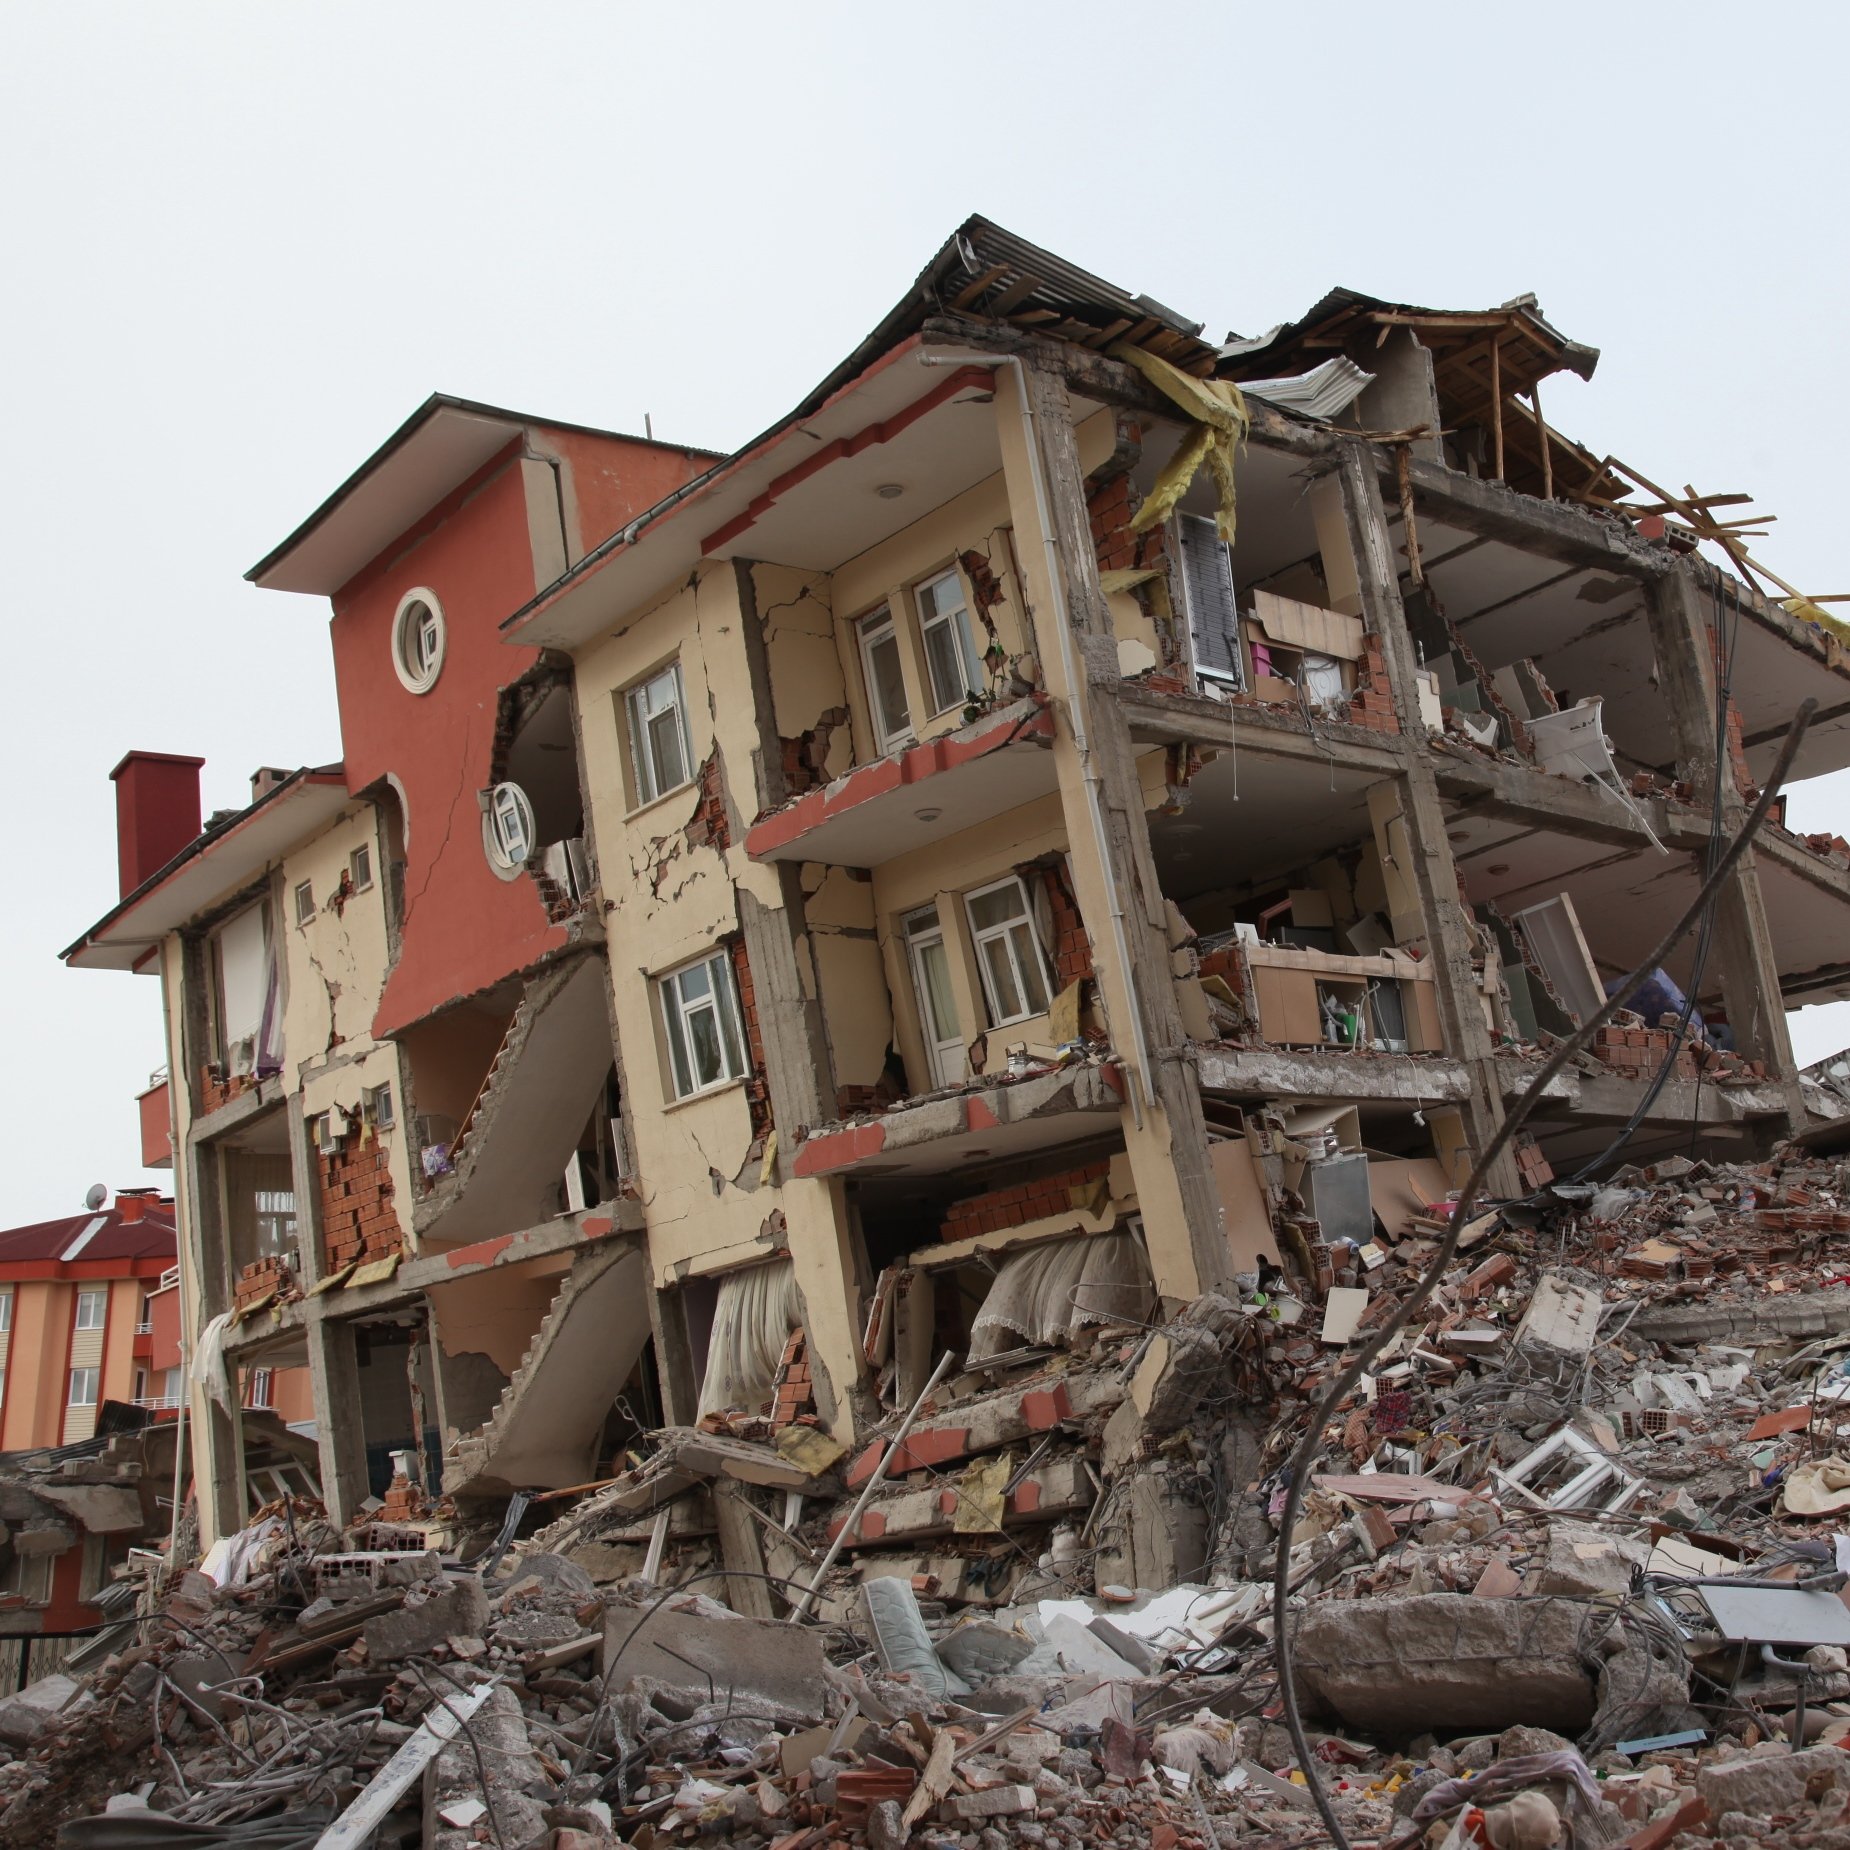 Major San Francisco Earthquake Could Cause 6,000 Deaths, 8 Billion in